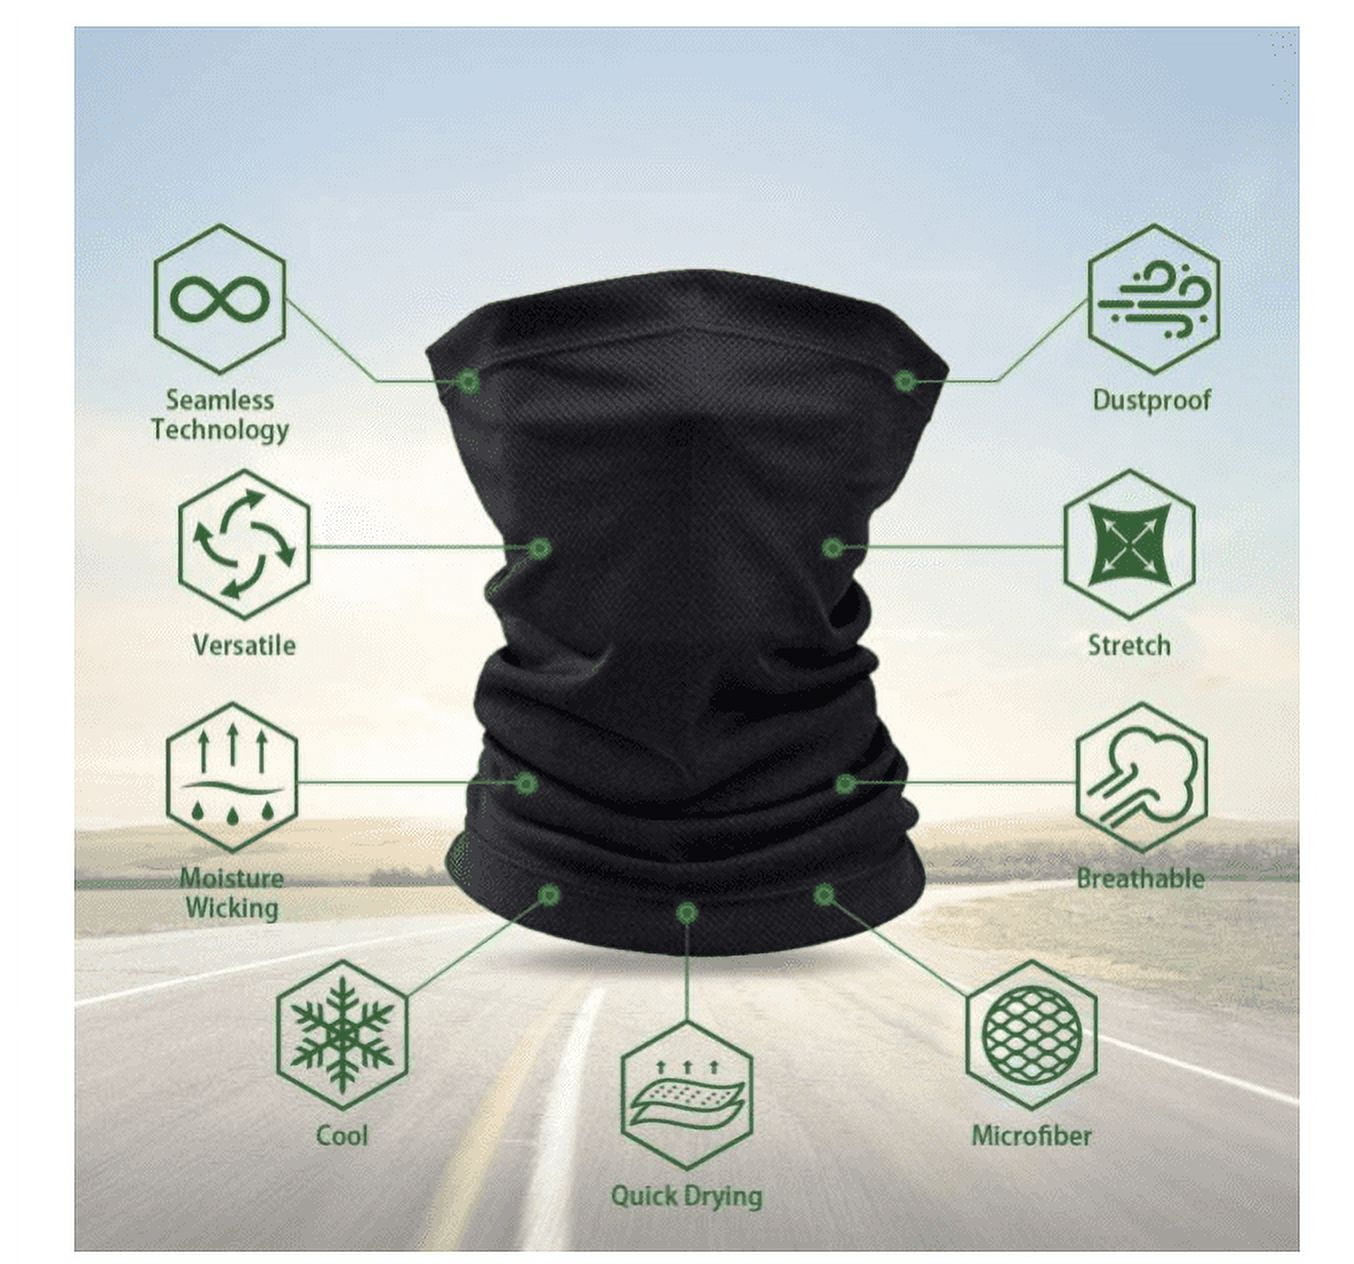 Neck Gaiter-Face Mask-Head Scarves-Headband-Flock Fish Design Green  Bandana-Quality Gift Headwear-Face Shield